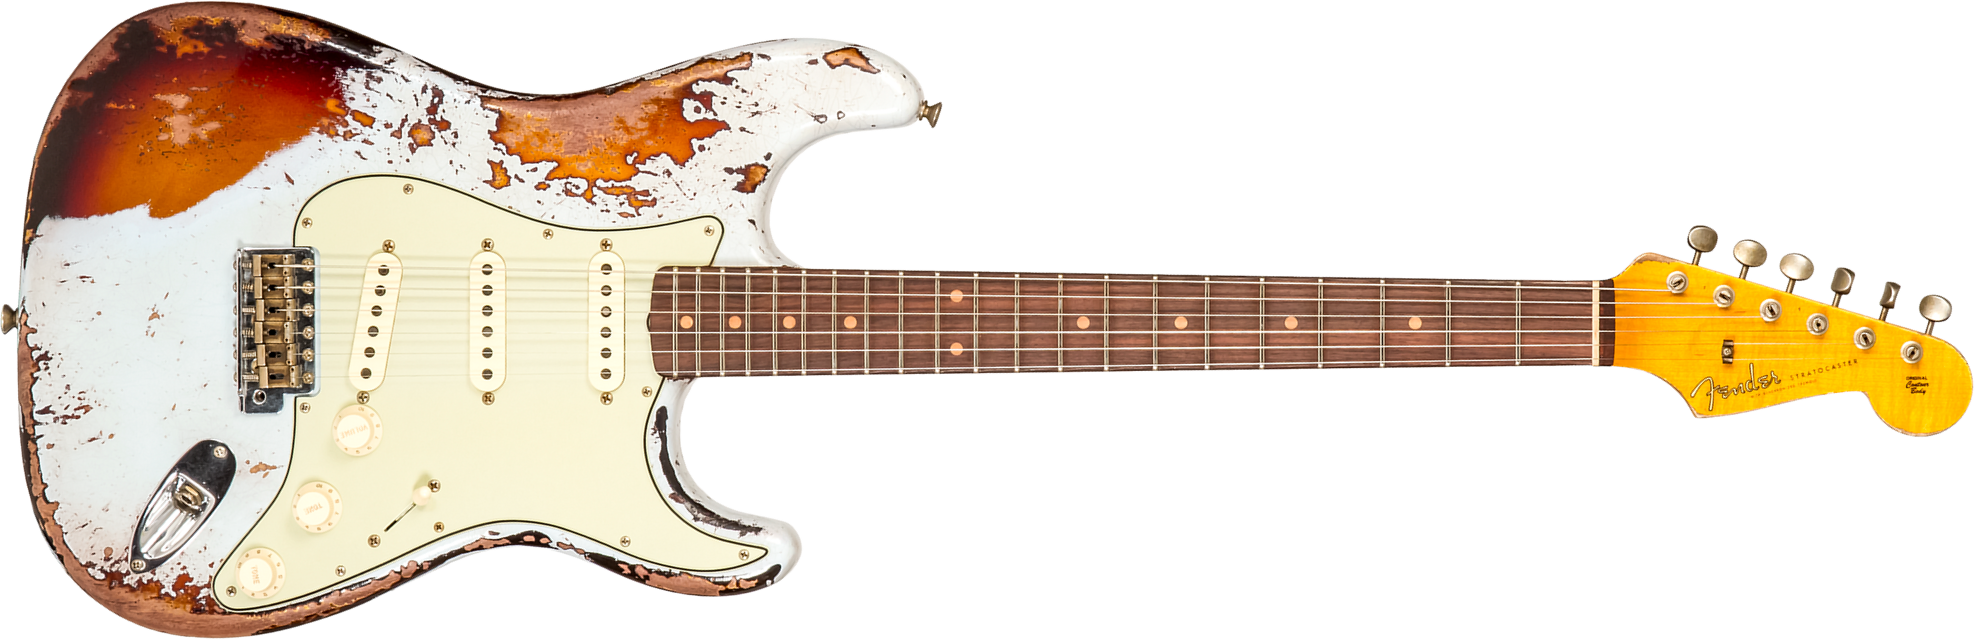 Fender Custom Shop Strat 1959 3s Trem Rw #cz576124 - Super Heavy Relic Sonic Blue O. Chocolate Sunburst - Elektrische gitaar in Str-vorm - Main pictur